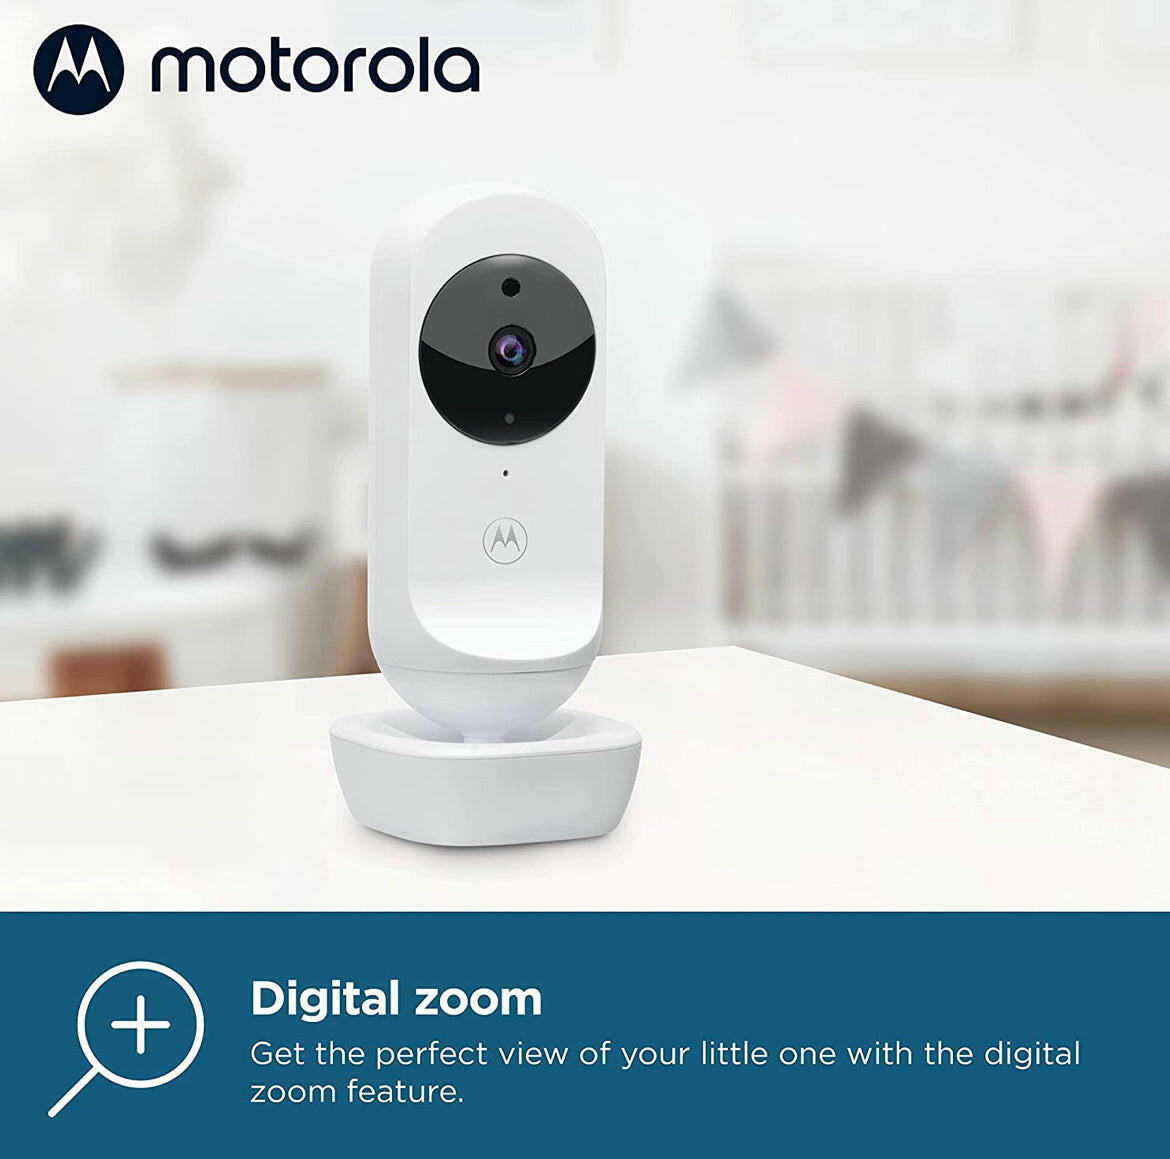 Motorola Baby Monitor - VM34 Video Baby Monitor with Camera, 1000ft Range 2.4 GHz Wireless 4.3" Screen, Two-Way Audio, Manual Pan/Tilt, Digital Zoom, Room Temperature Sensor, Lullabies, Night Vision.